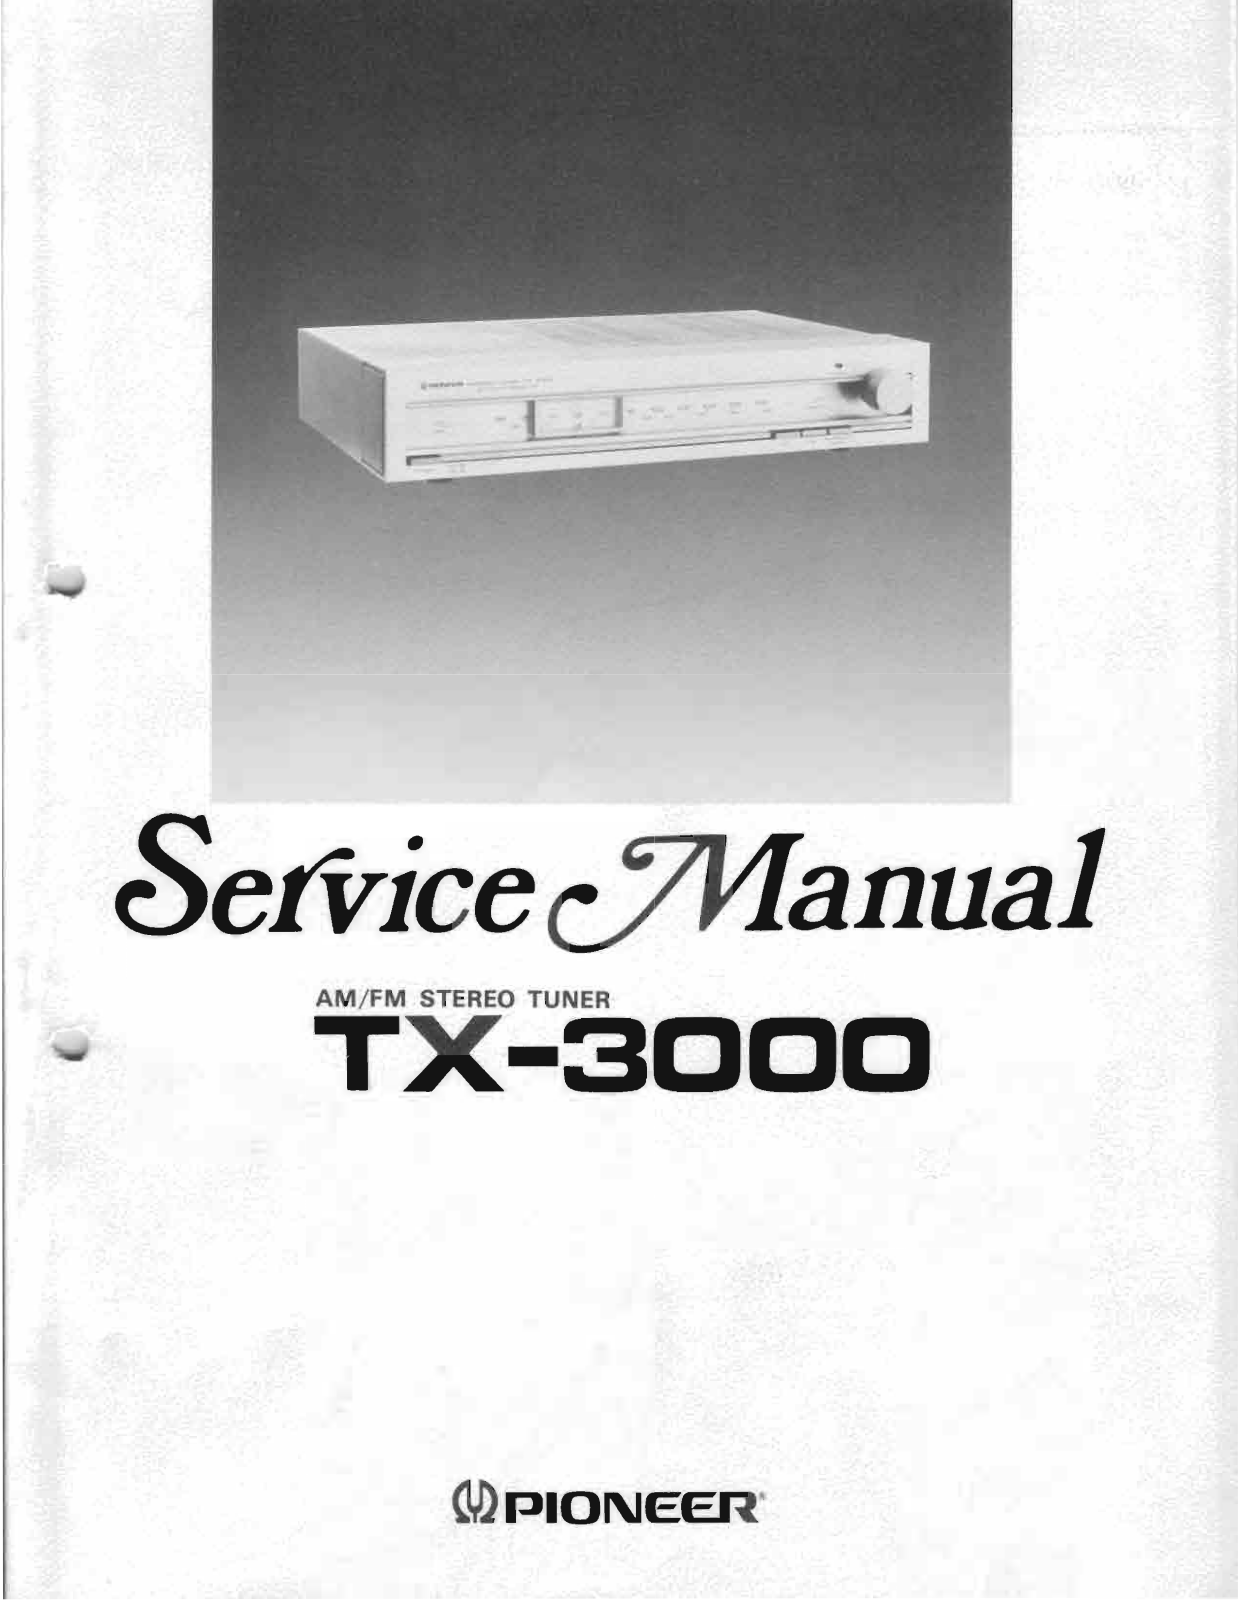 Pioneer TX-3000 Service Manual